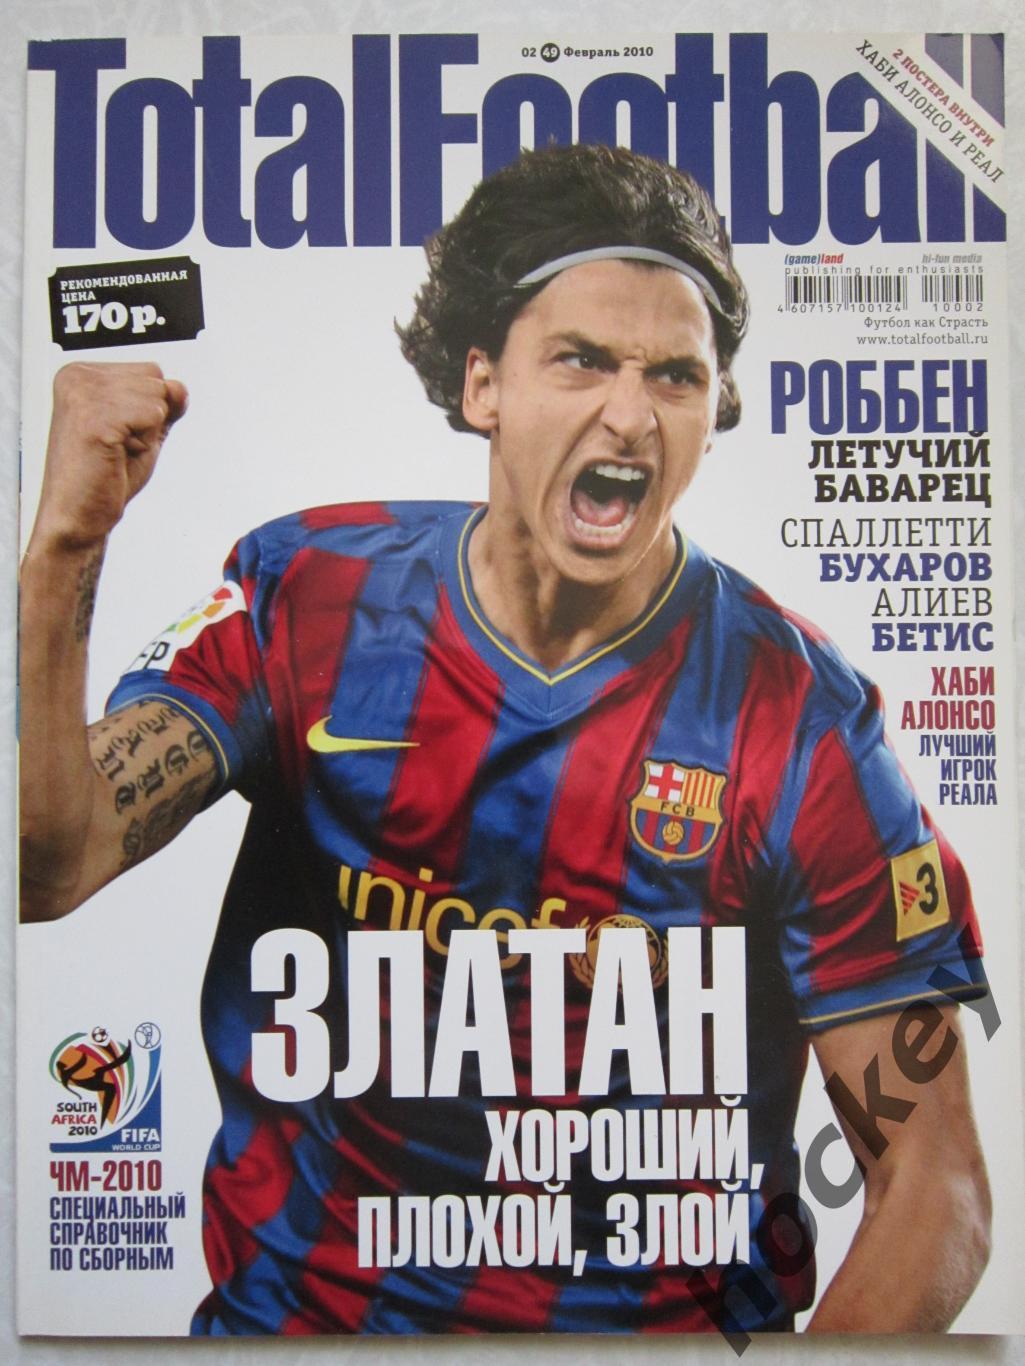 Журнал Тотал Футбол № 2.2010 (февраль). Постер команда Реал + Хаби Алонсо